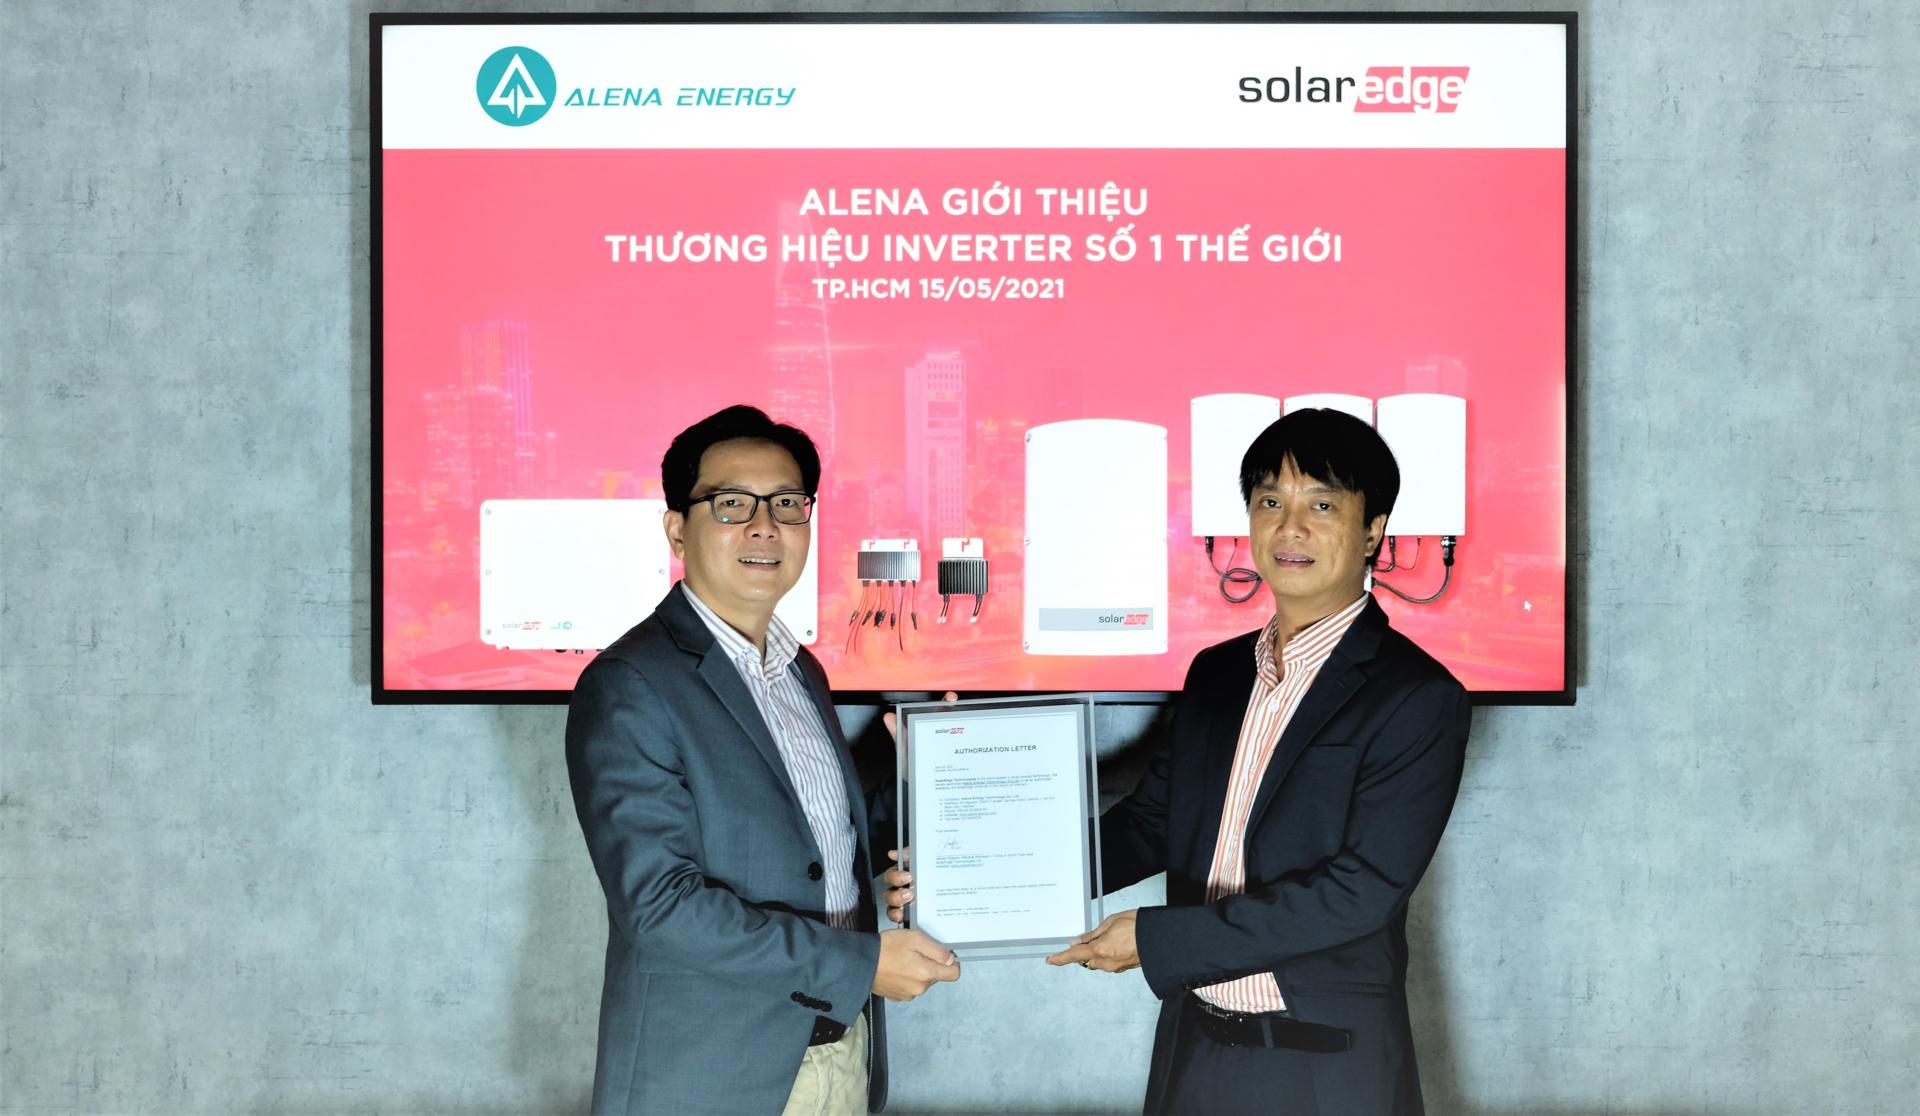 Alena Energy giới thiệu SolarEdge - thương hiệu inverter số 1 thế giới